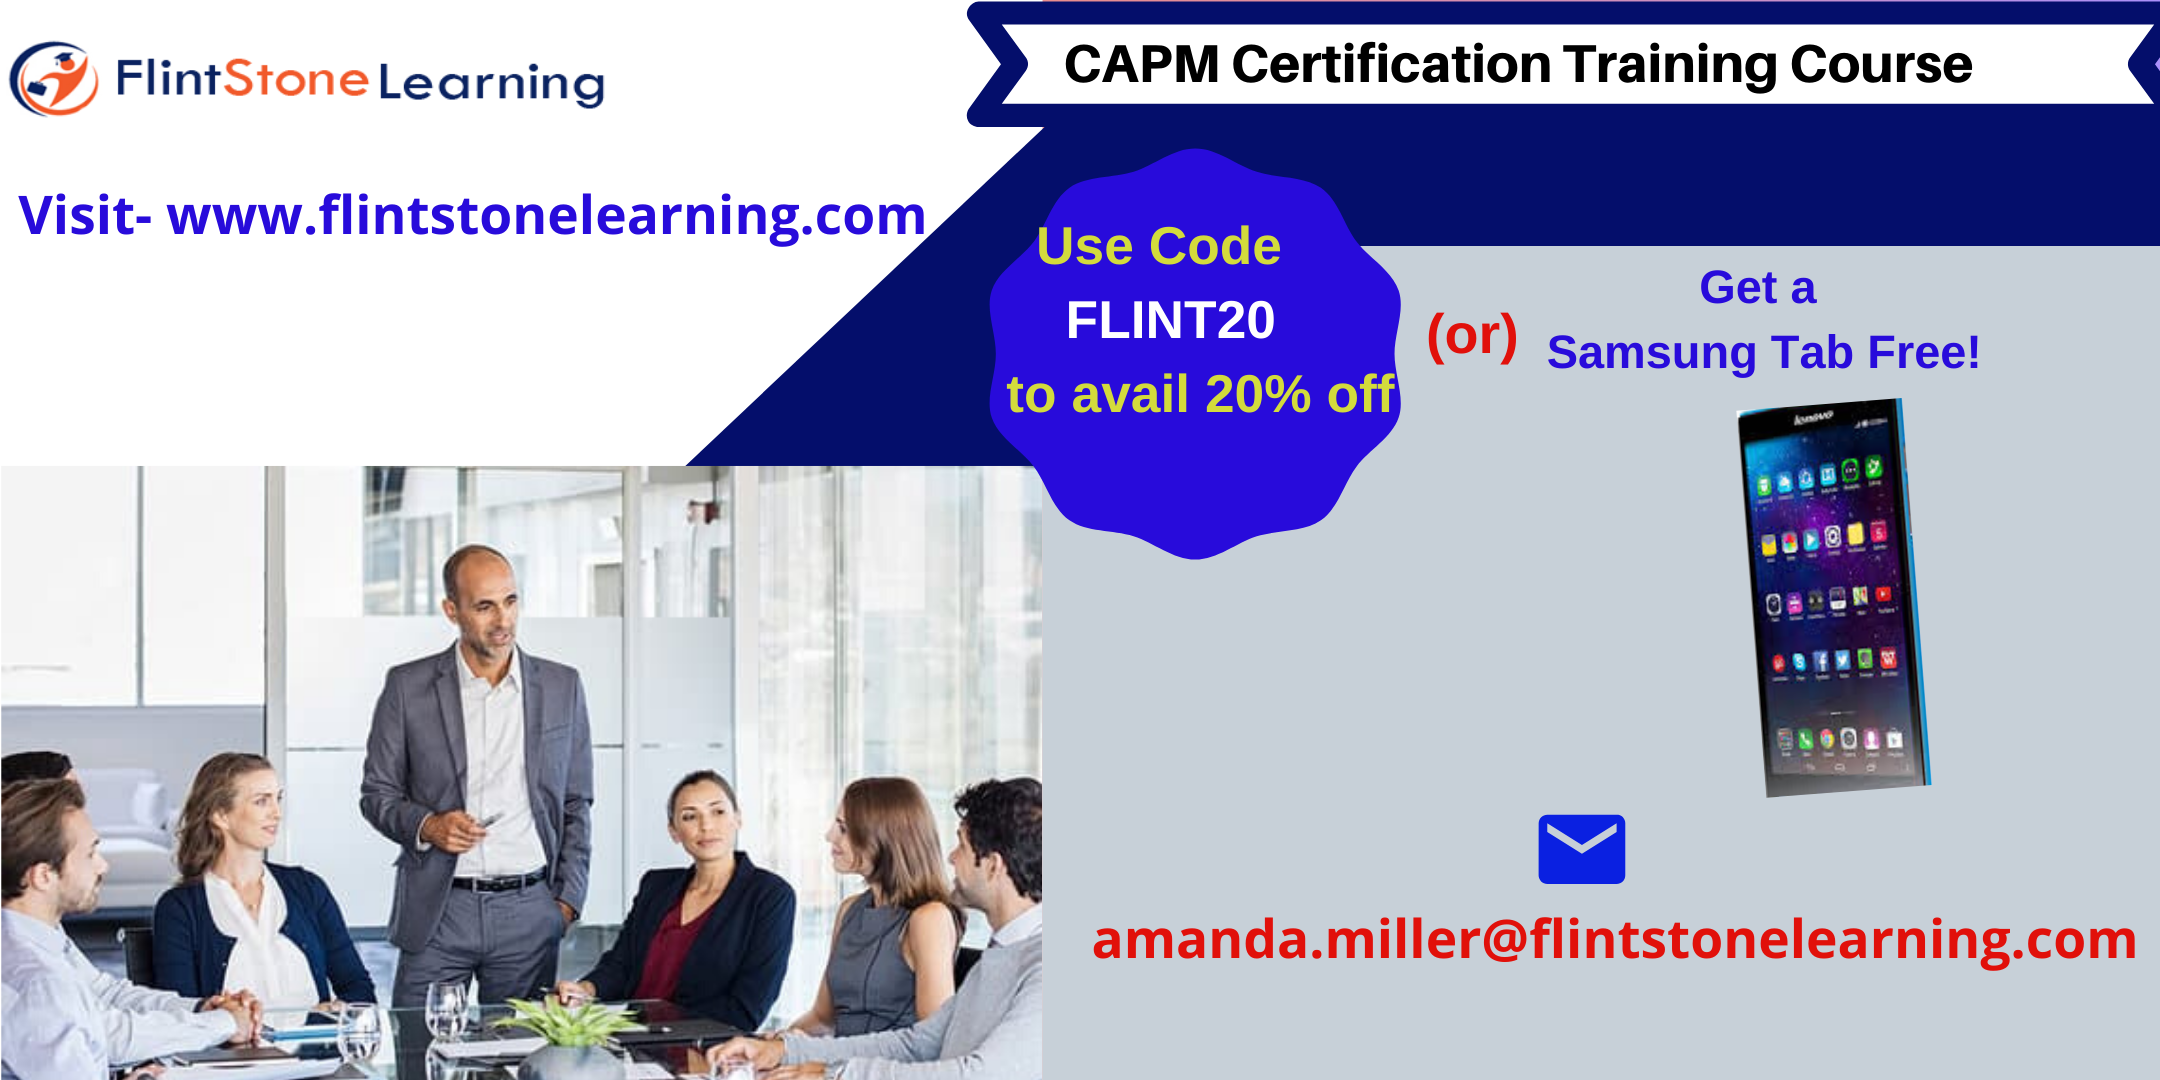 CAPM Certification Training Course in Belmont Shores, CA